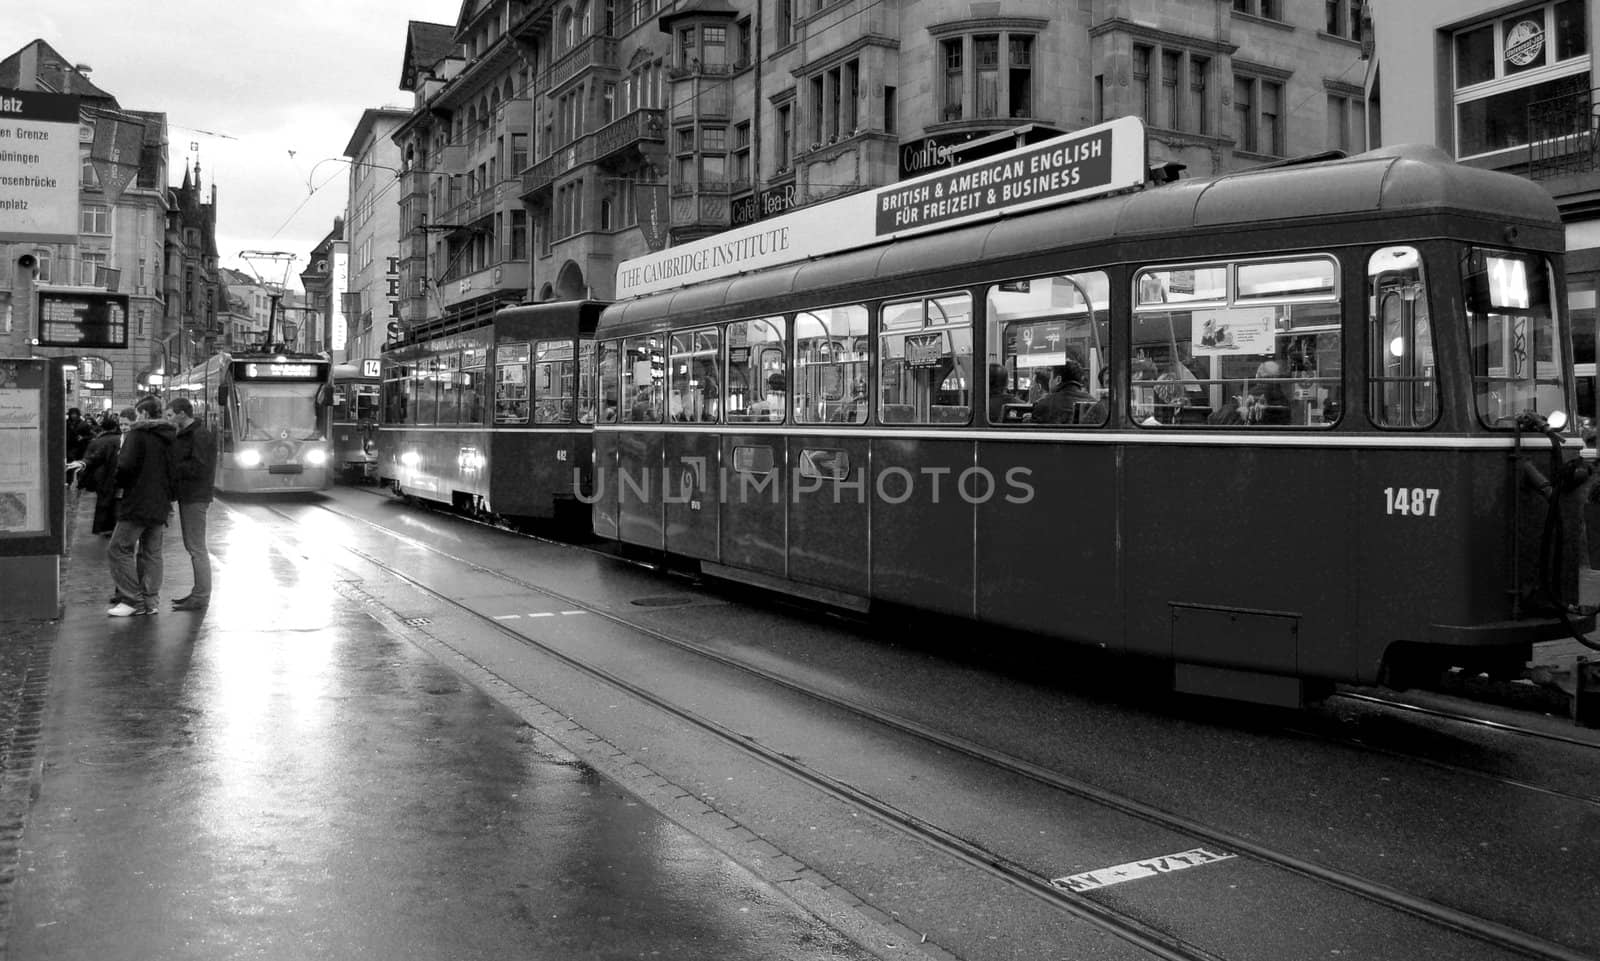 Trams in Basel by Rainman